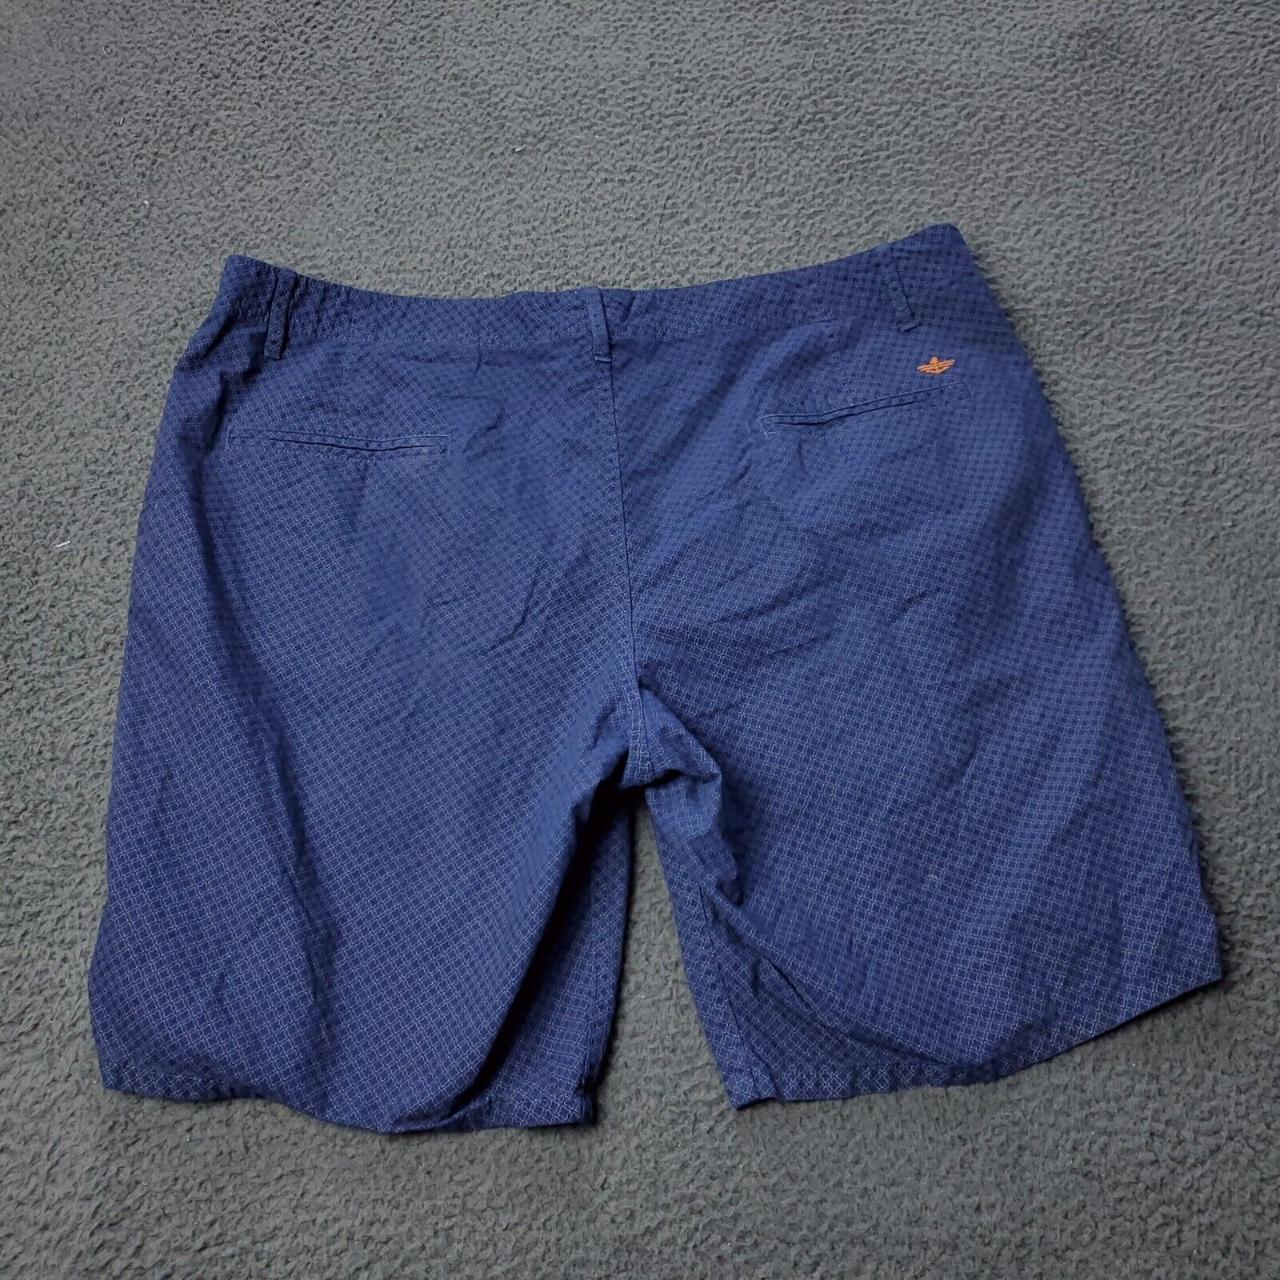 Dockers Men's Blue Shorts (2)